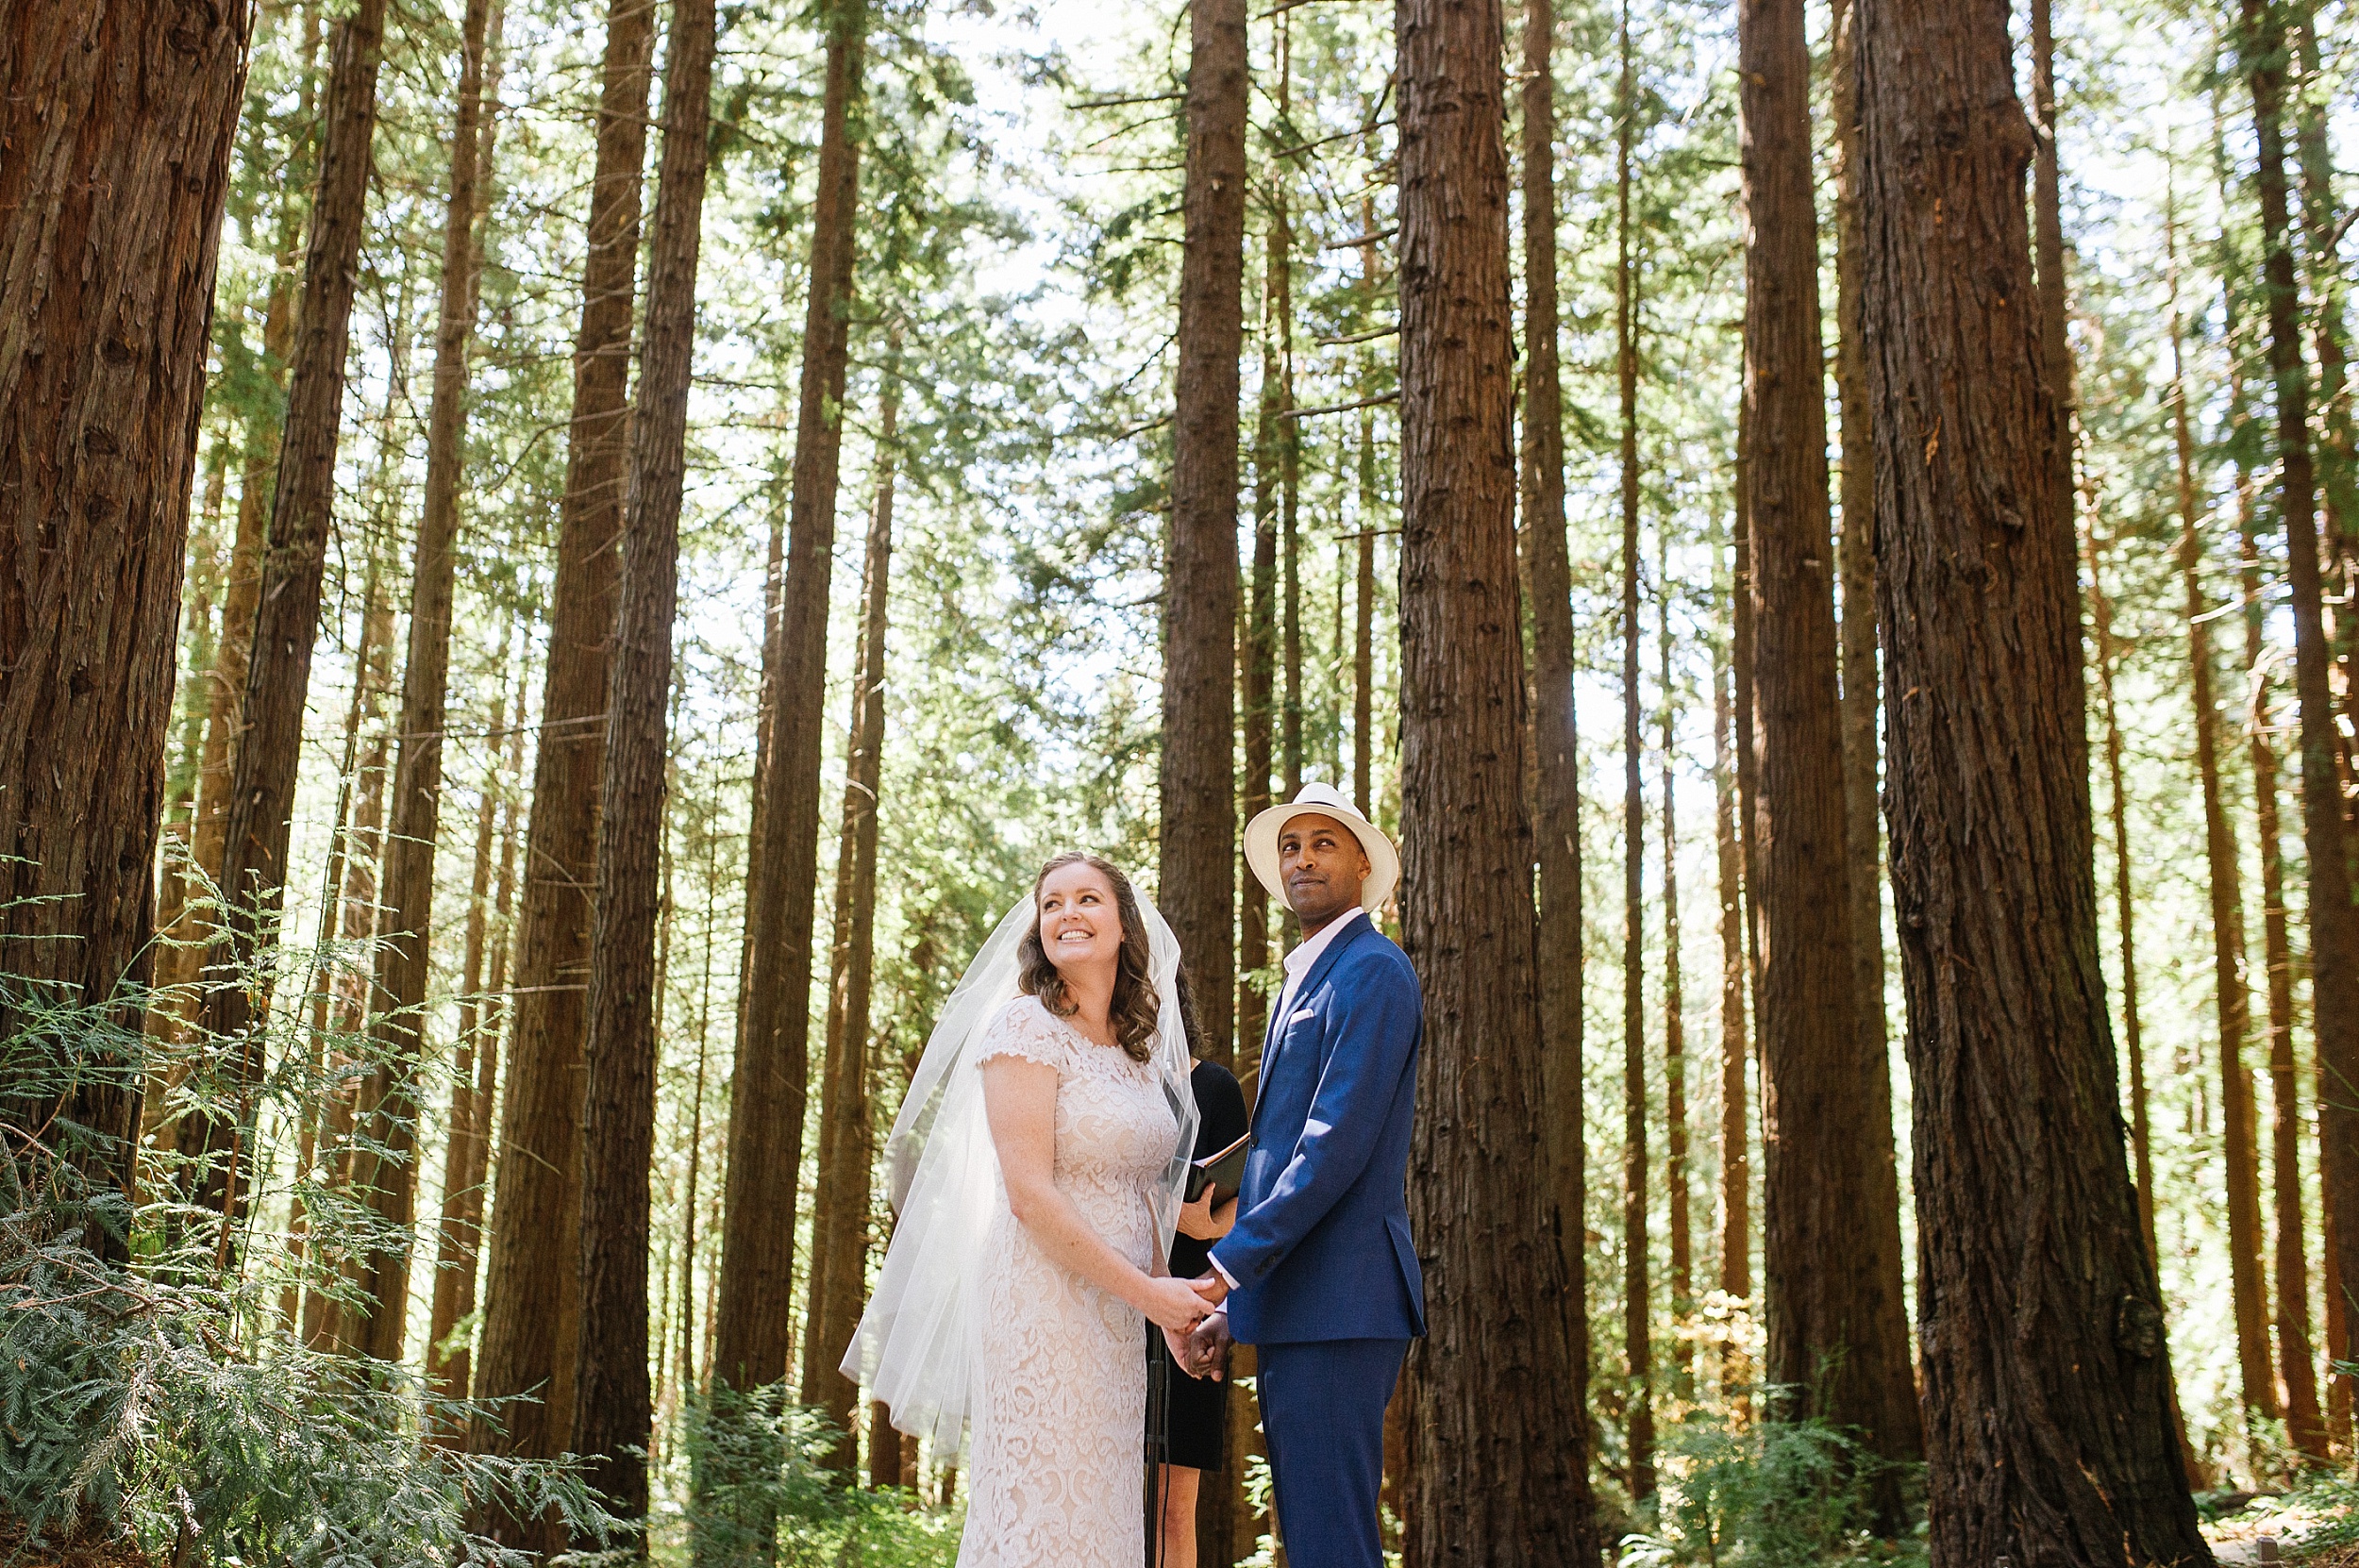 ucberkeley_botanical_redwoods_outdoor_wedding_jennyrez_cdp_0012.jpg